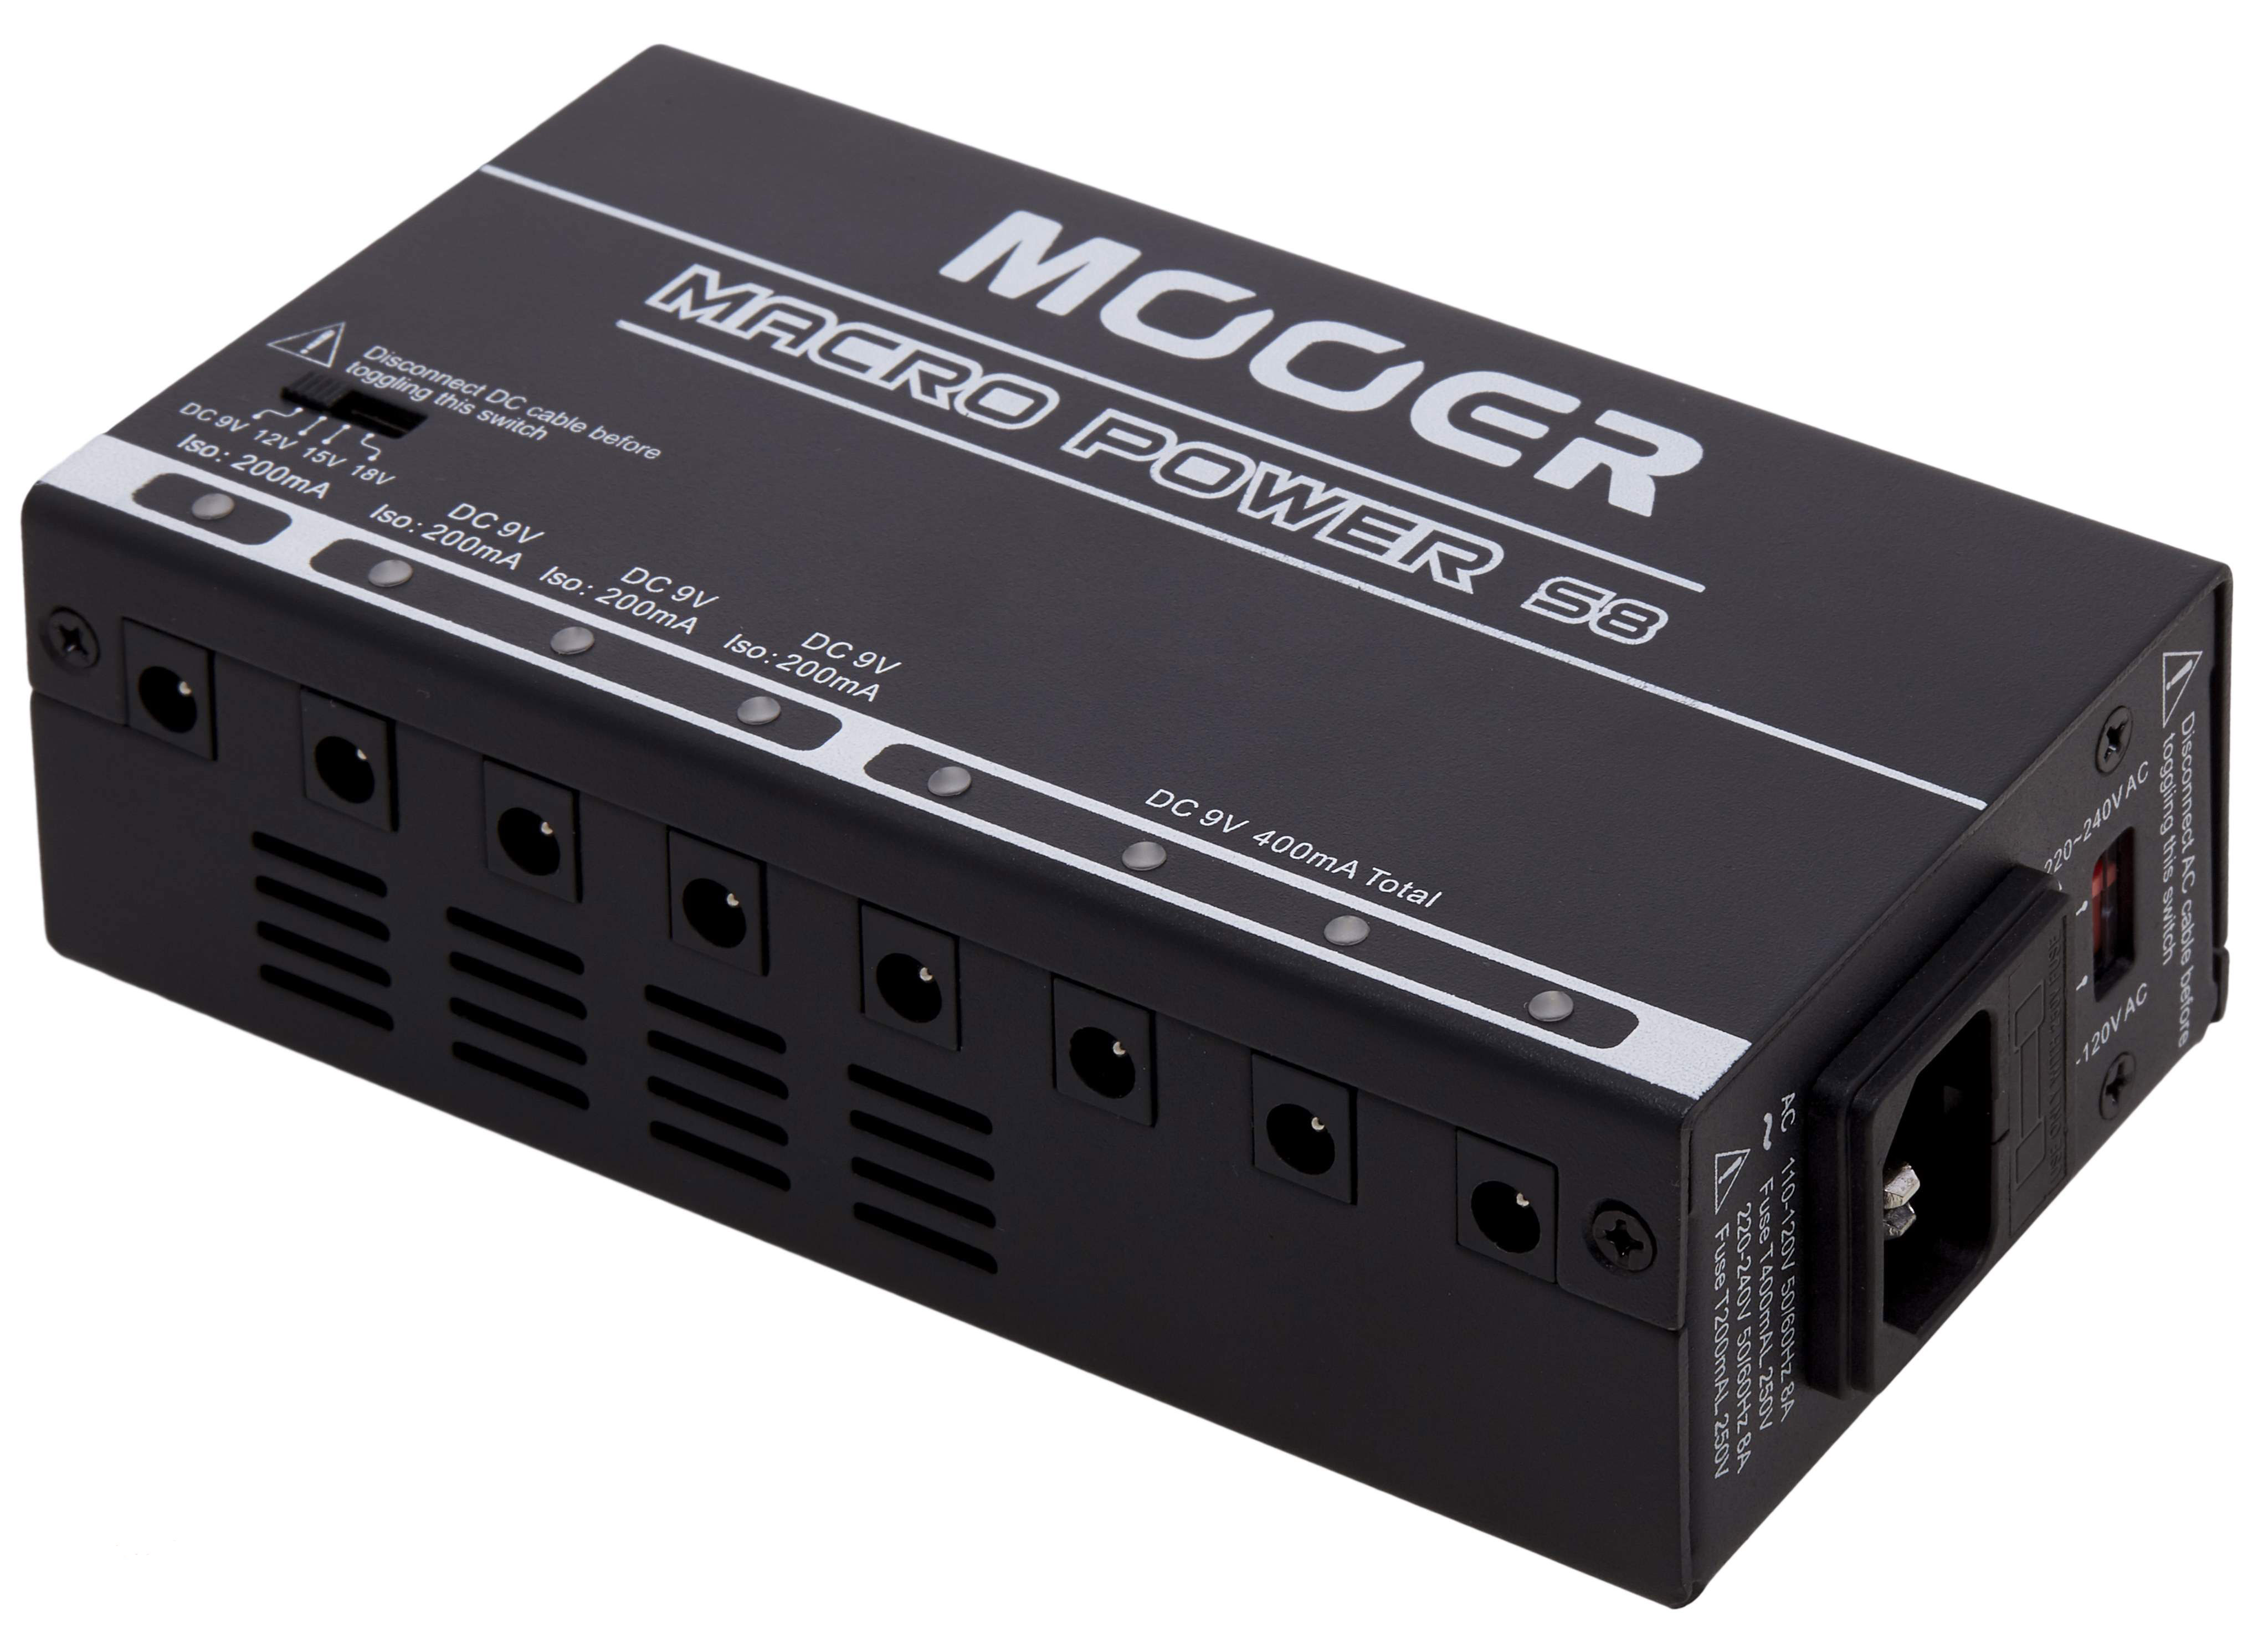 Mooer Macro Power S8 по цене 6 190 ₽